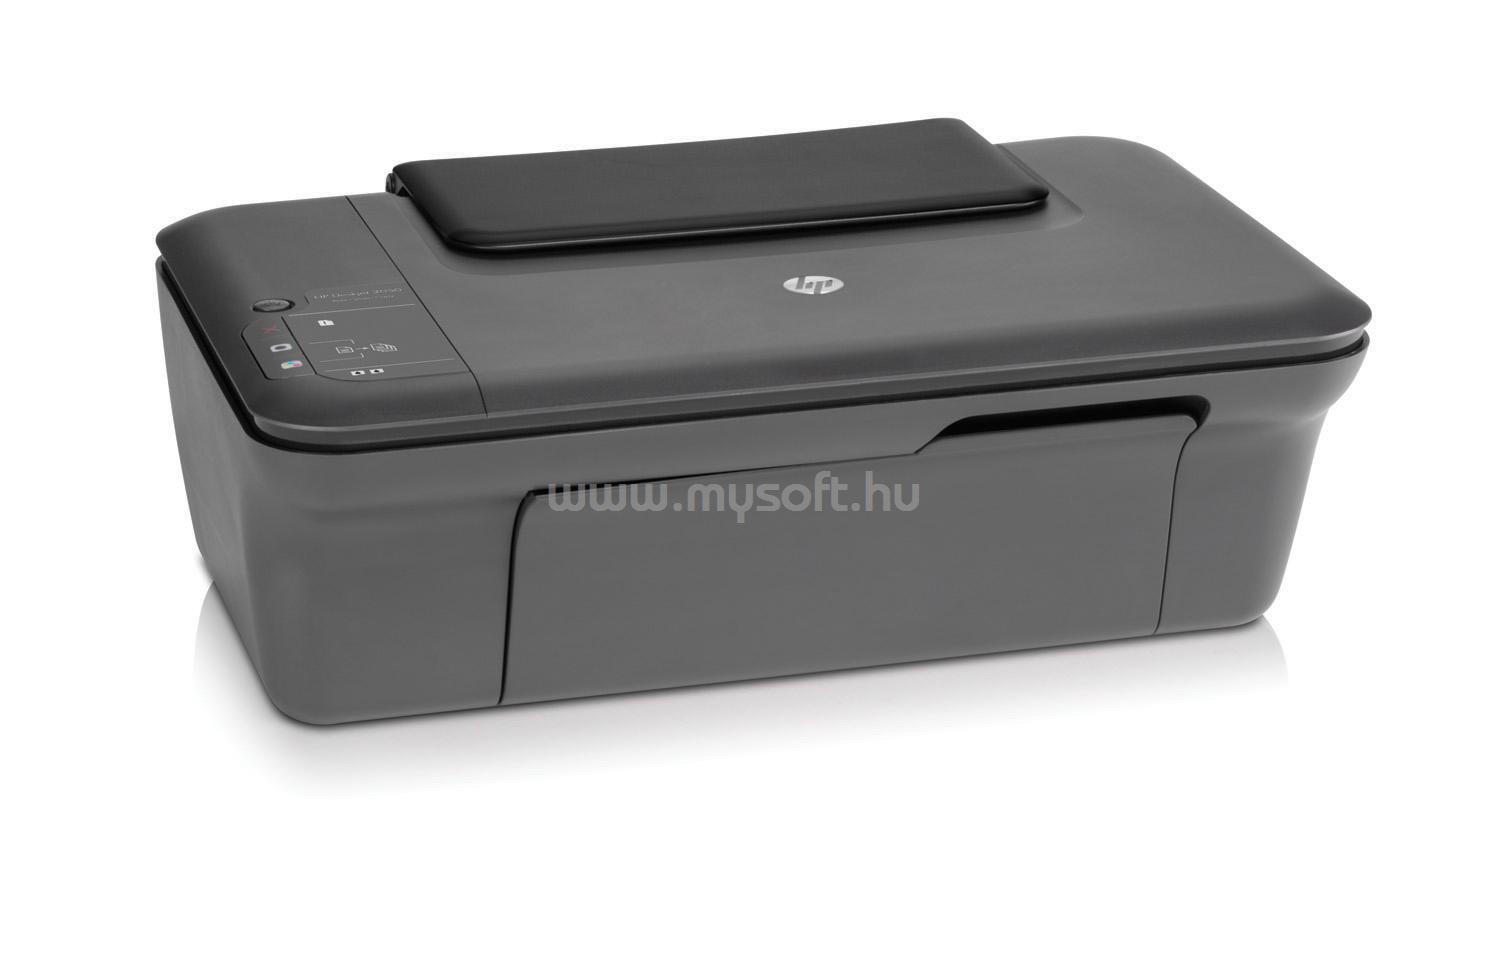 Printer Hp Deskjet 2050 All In One